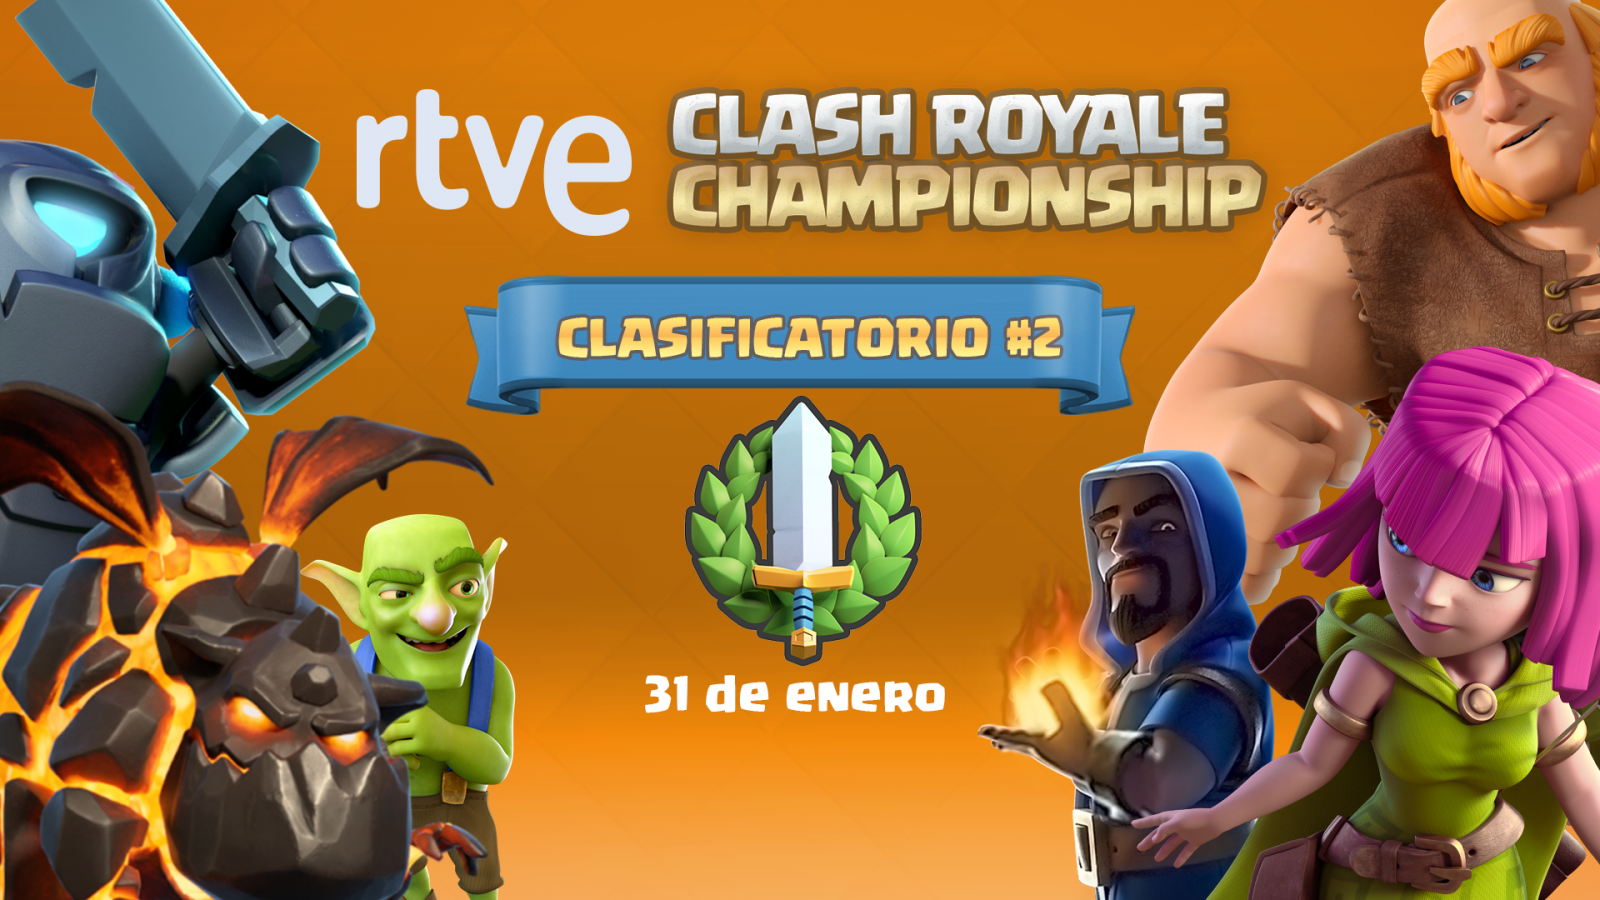 La liga RTVE Clash Royale Championship celebra su segundo clasificatorio